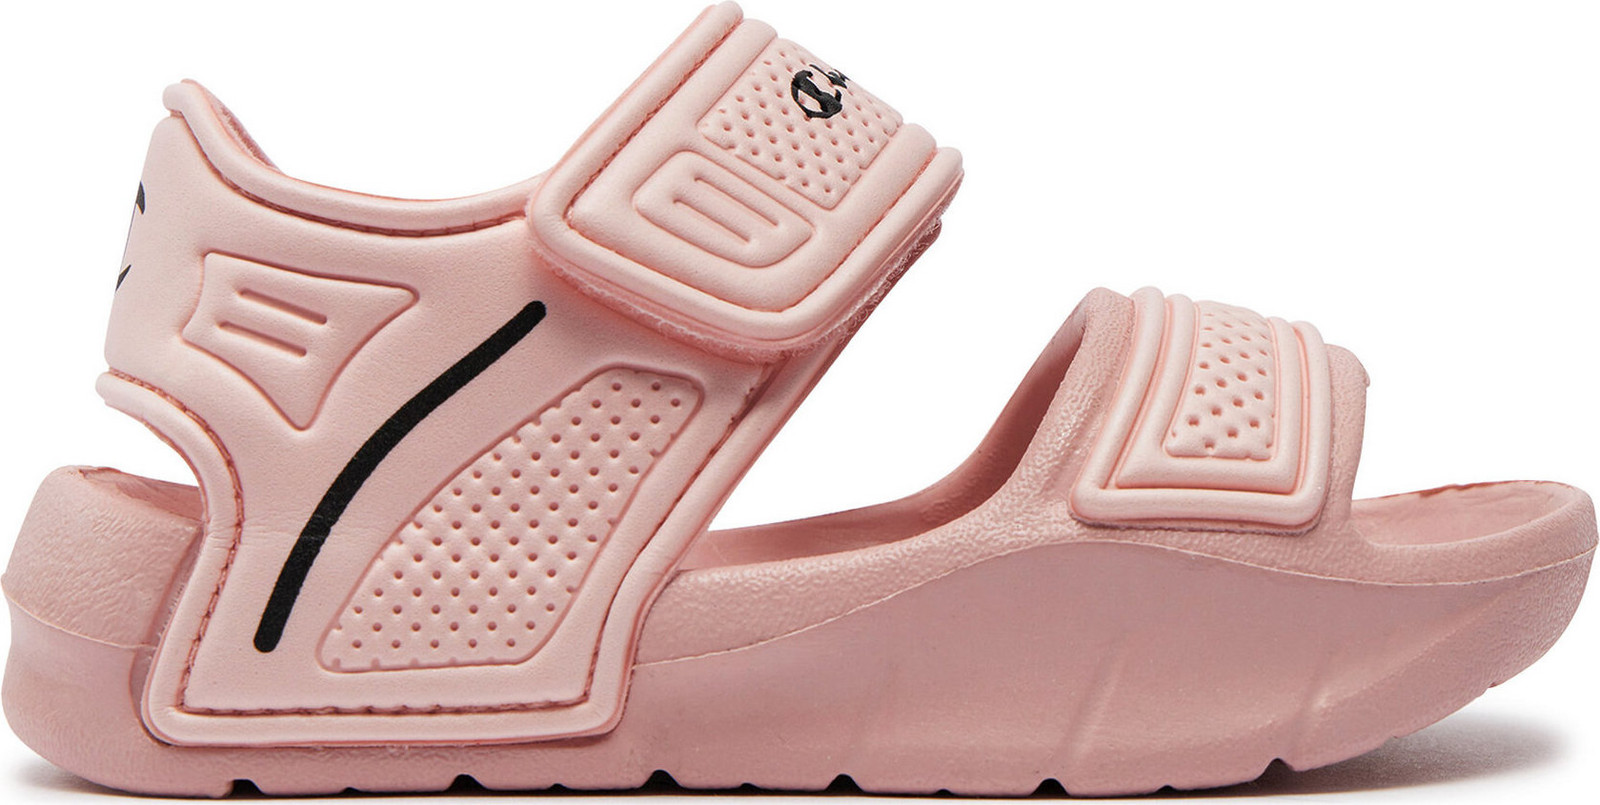 Sandály Champion Squirt G Td Sandal S32684-CHA-PS014 Pink/Nbk